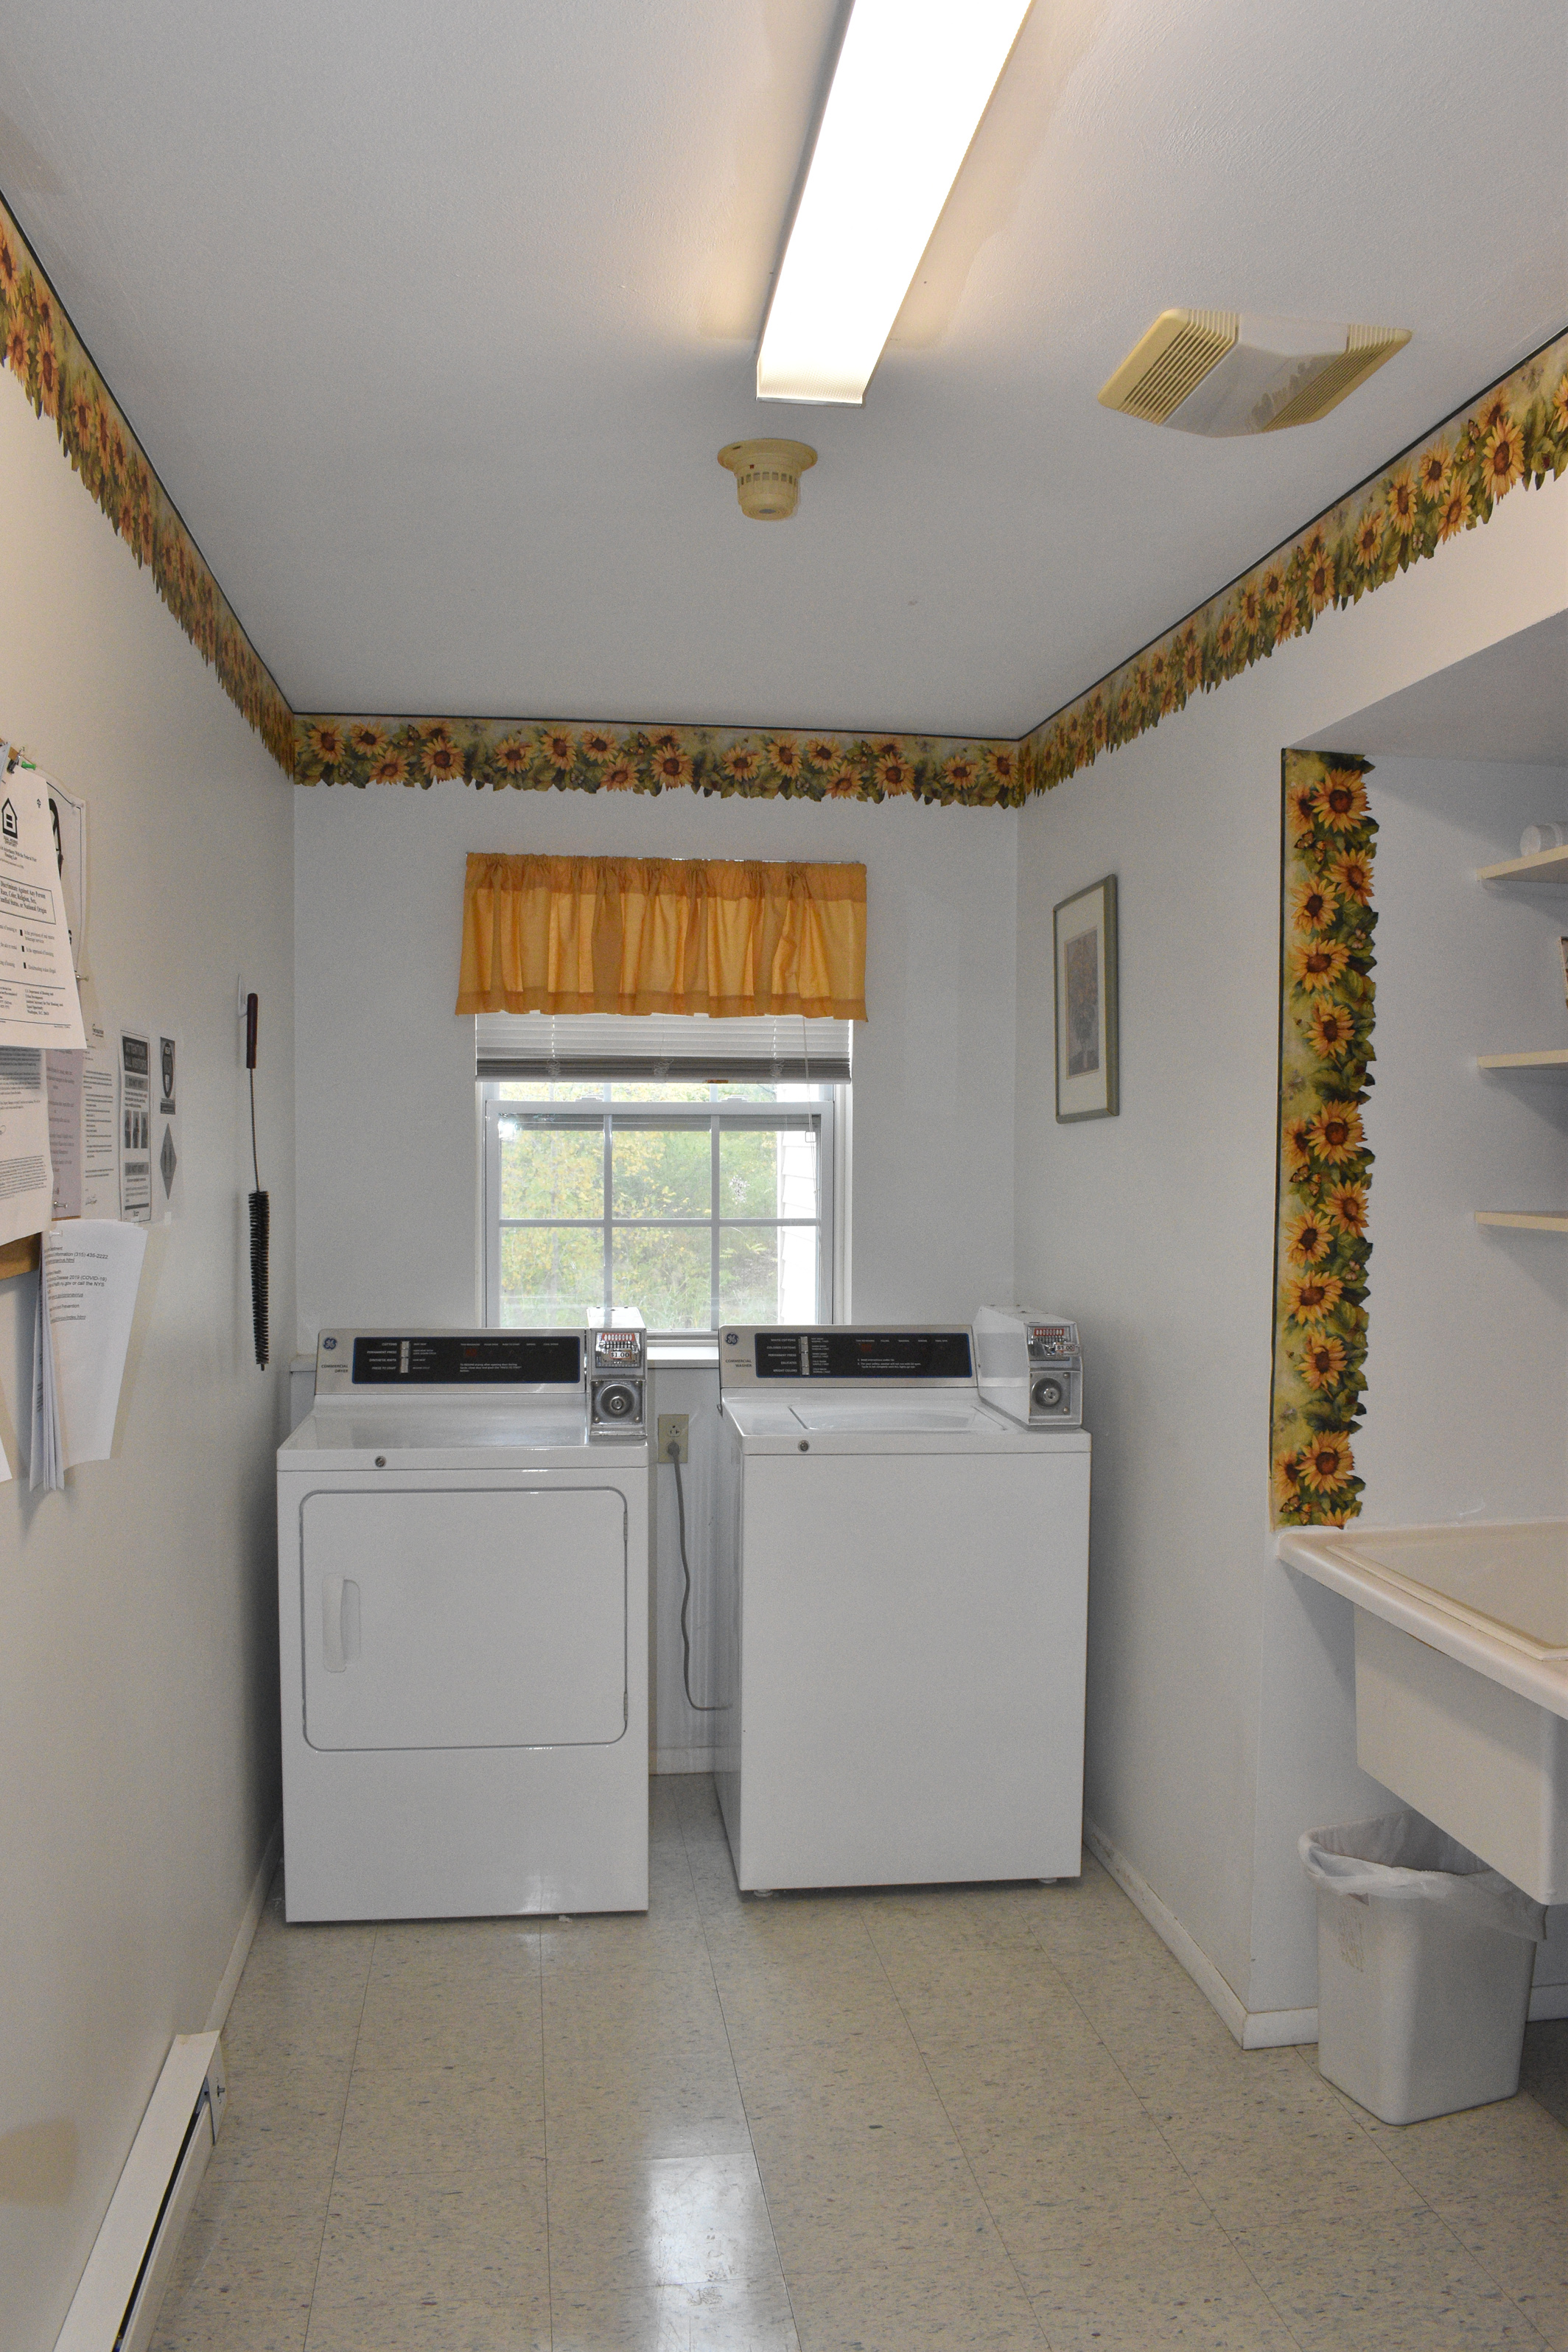 property management company client list syracuse ny image of laundry room at gateway senior apartments